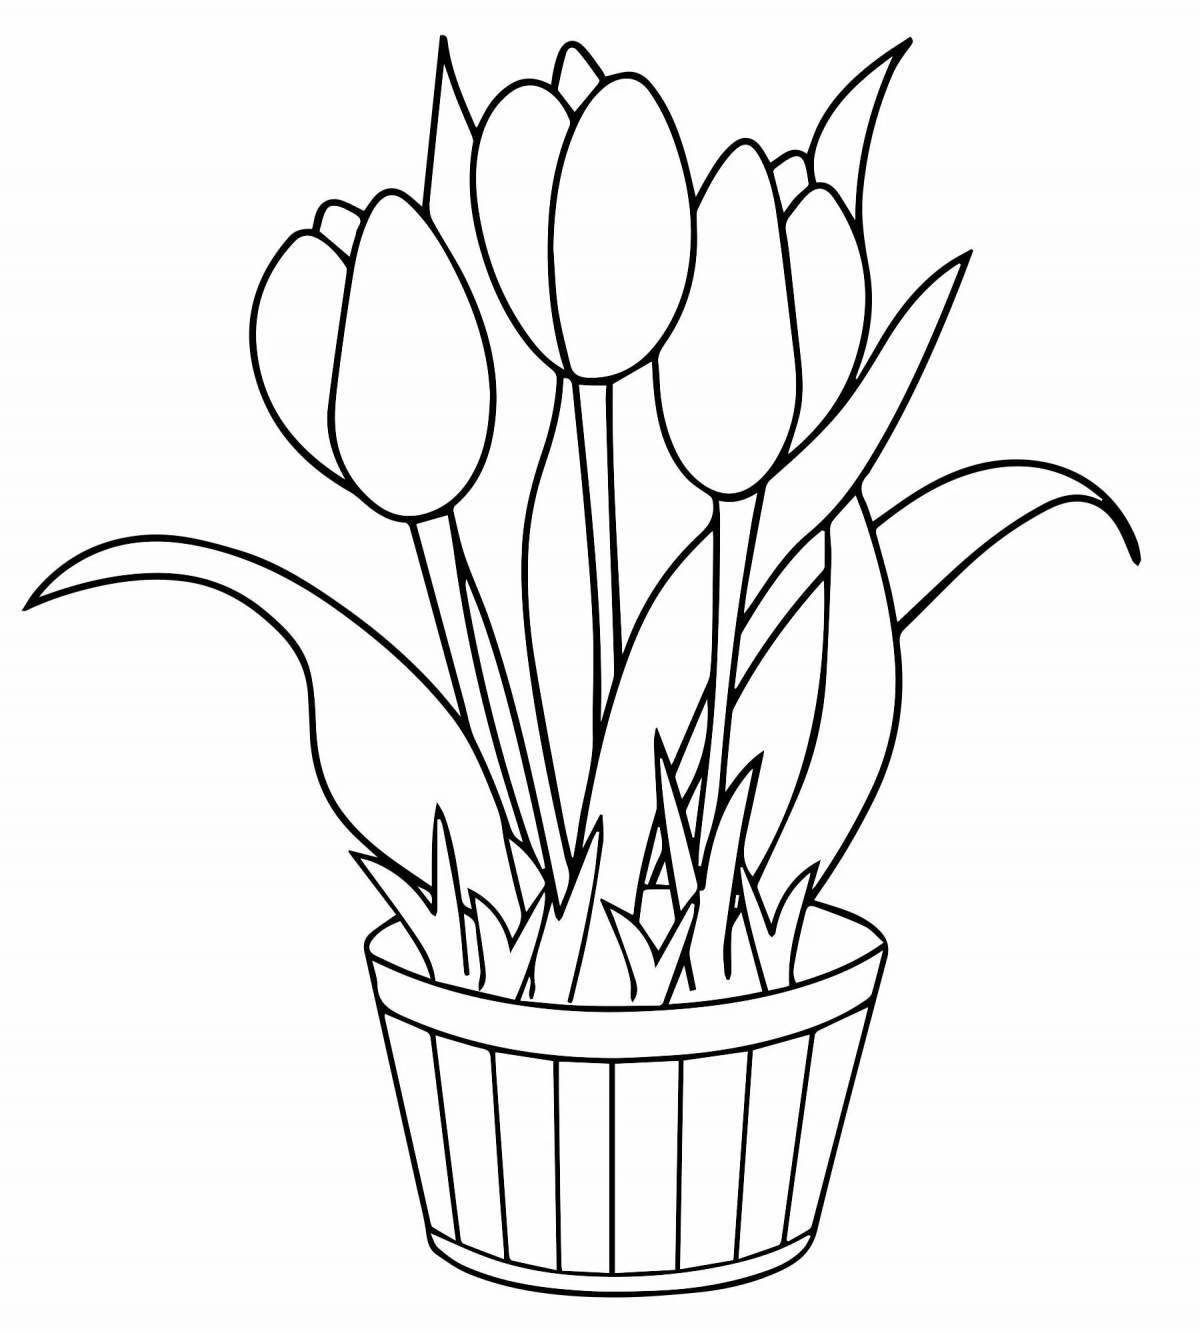 Яркие тюльпаны 8 марта раскраски